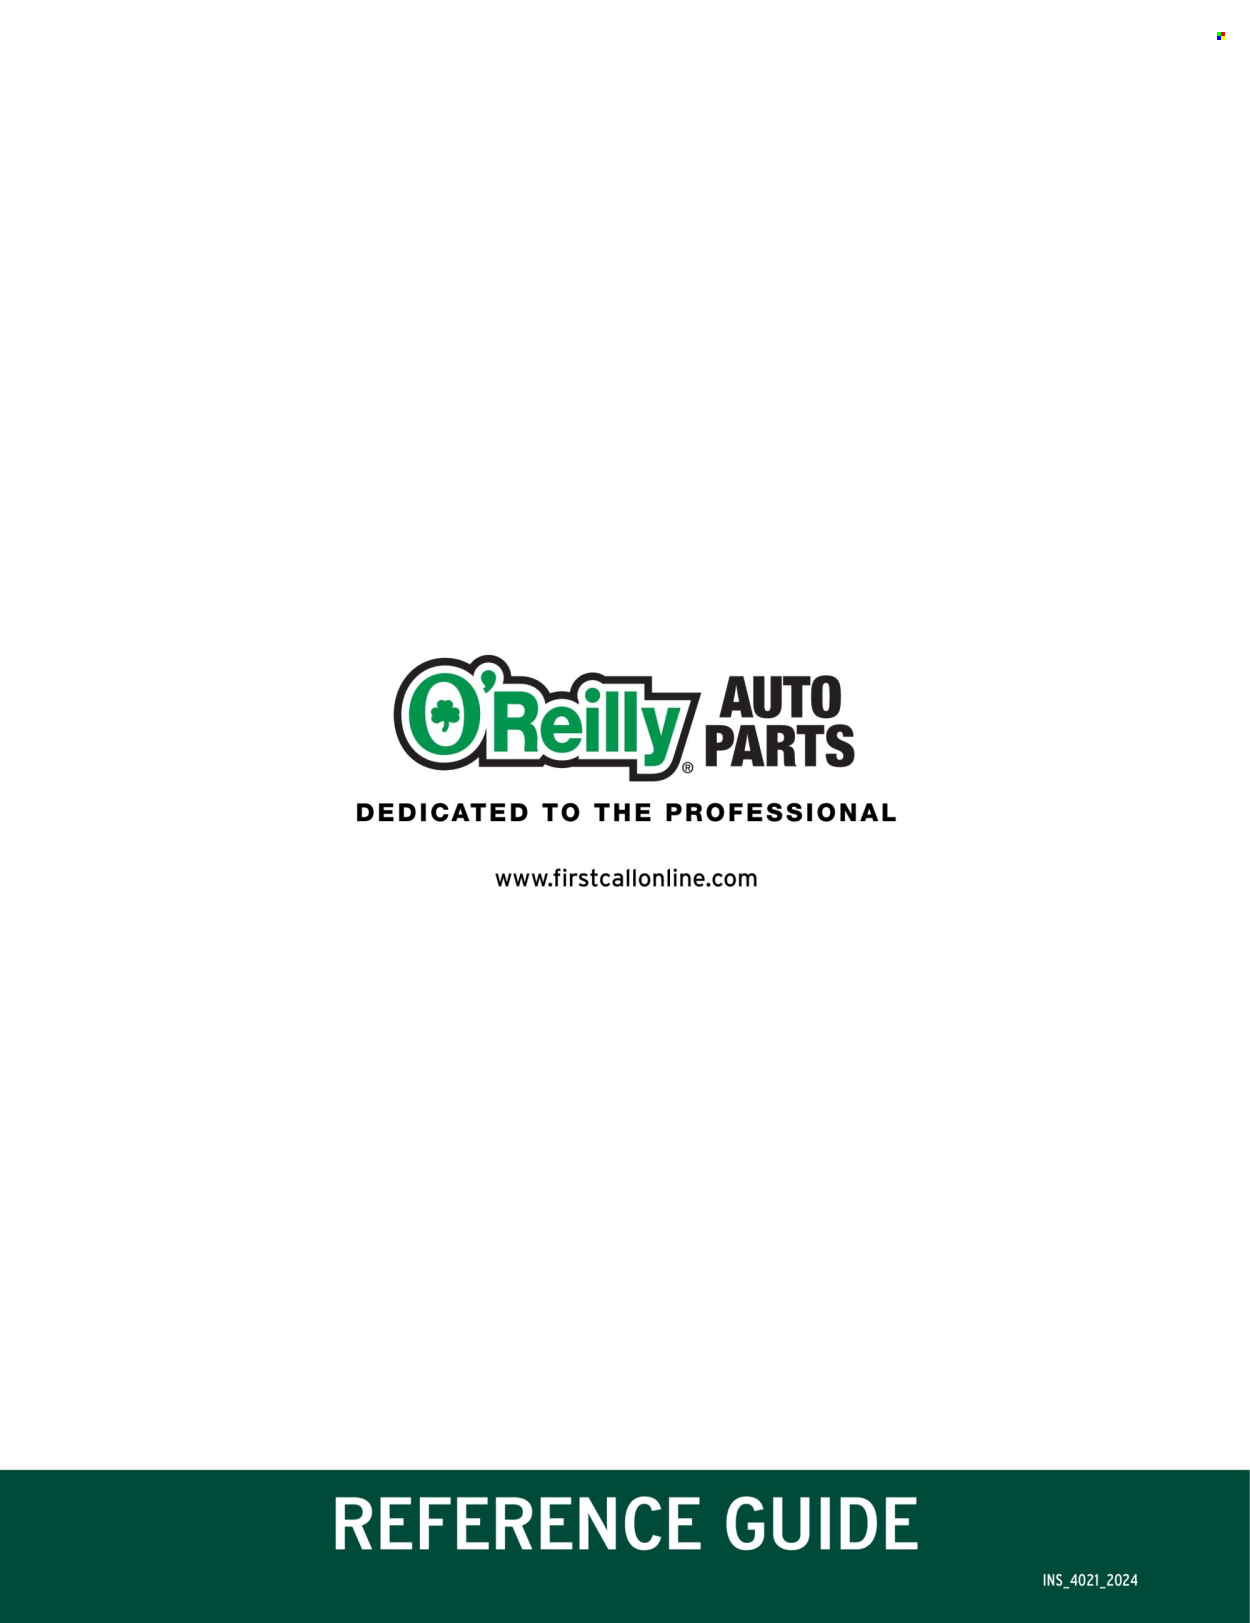 O'Reilly Auto Parts ad .